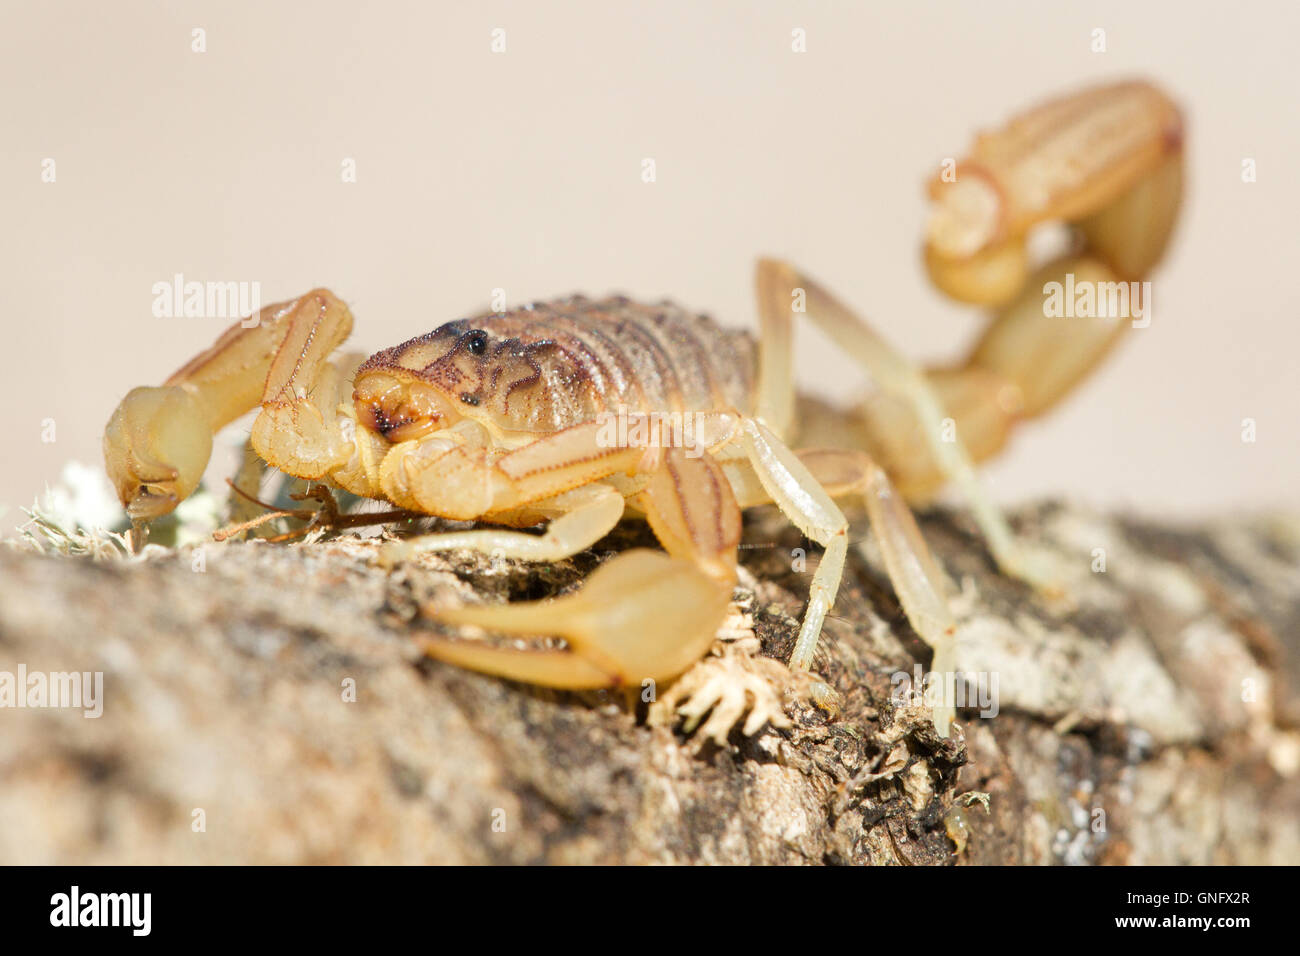 Common yellow scorpion ( Buthus occitanus ), Alacrane, Spain Stock Photo